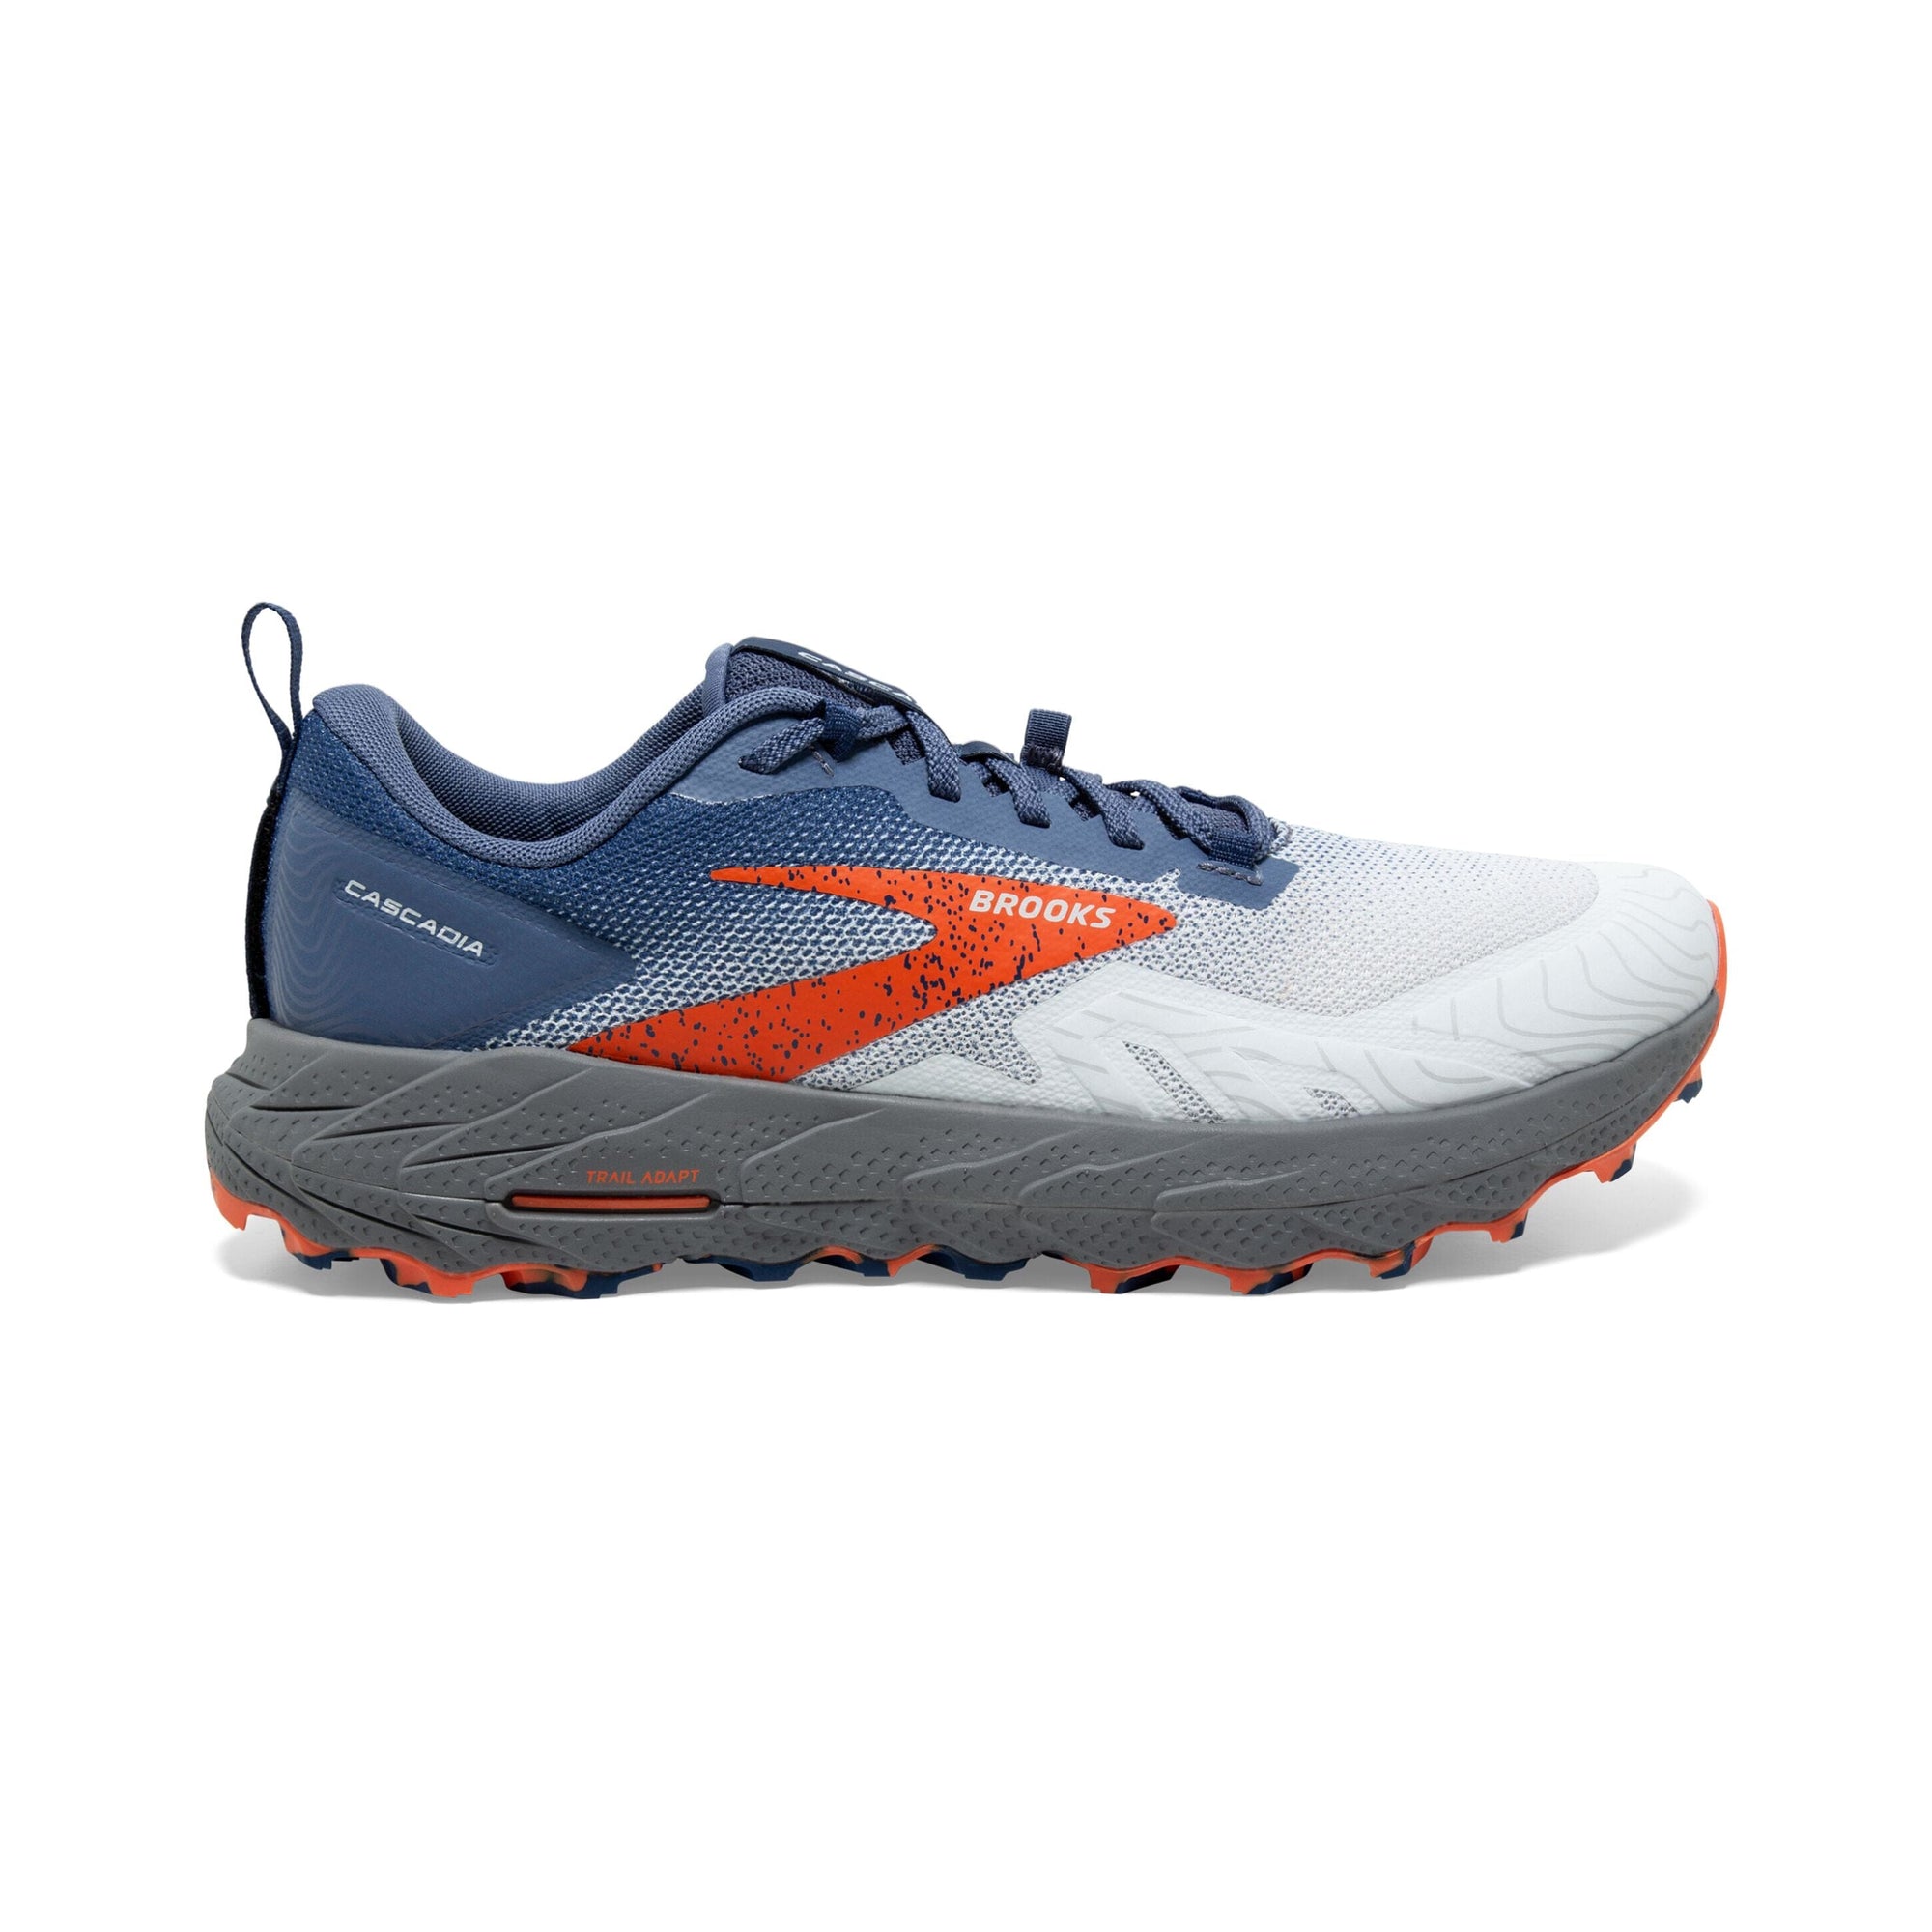 Brooks Men's Cascadia 17 Trail Running Shoes Blue/Navy/Firecracker US 8.5 Medium